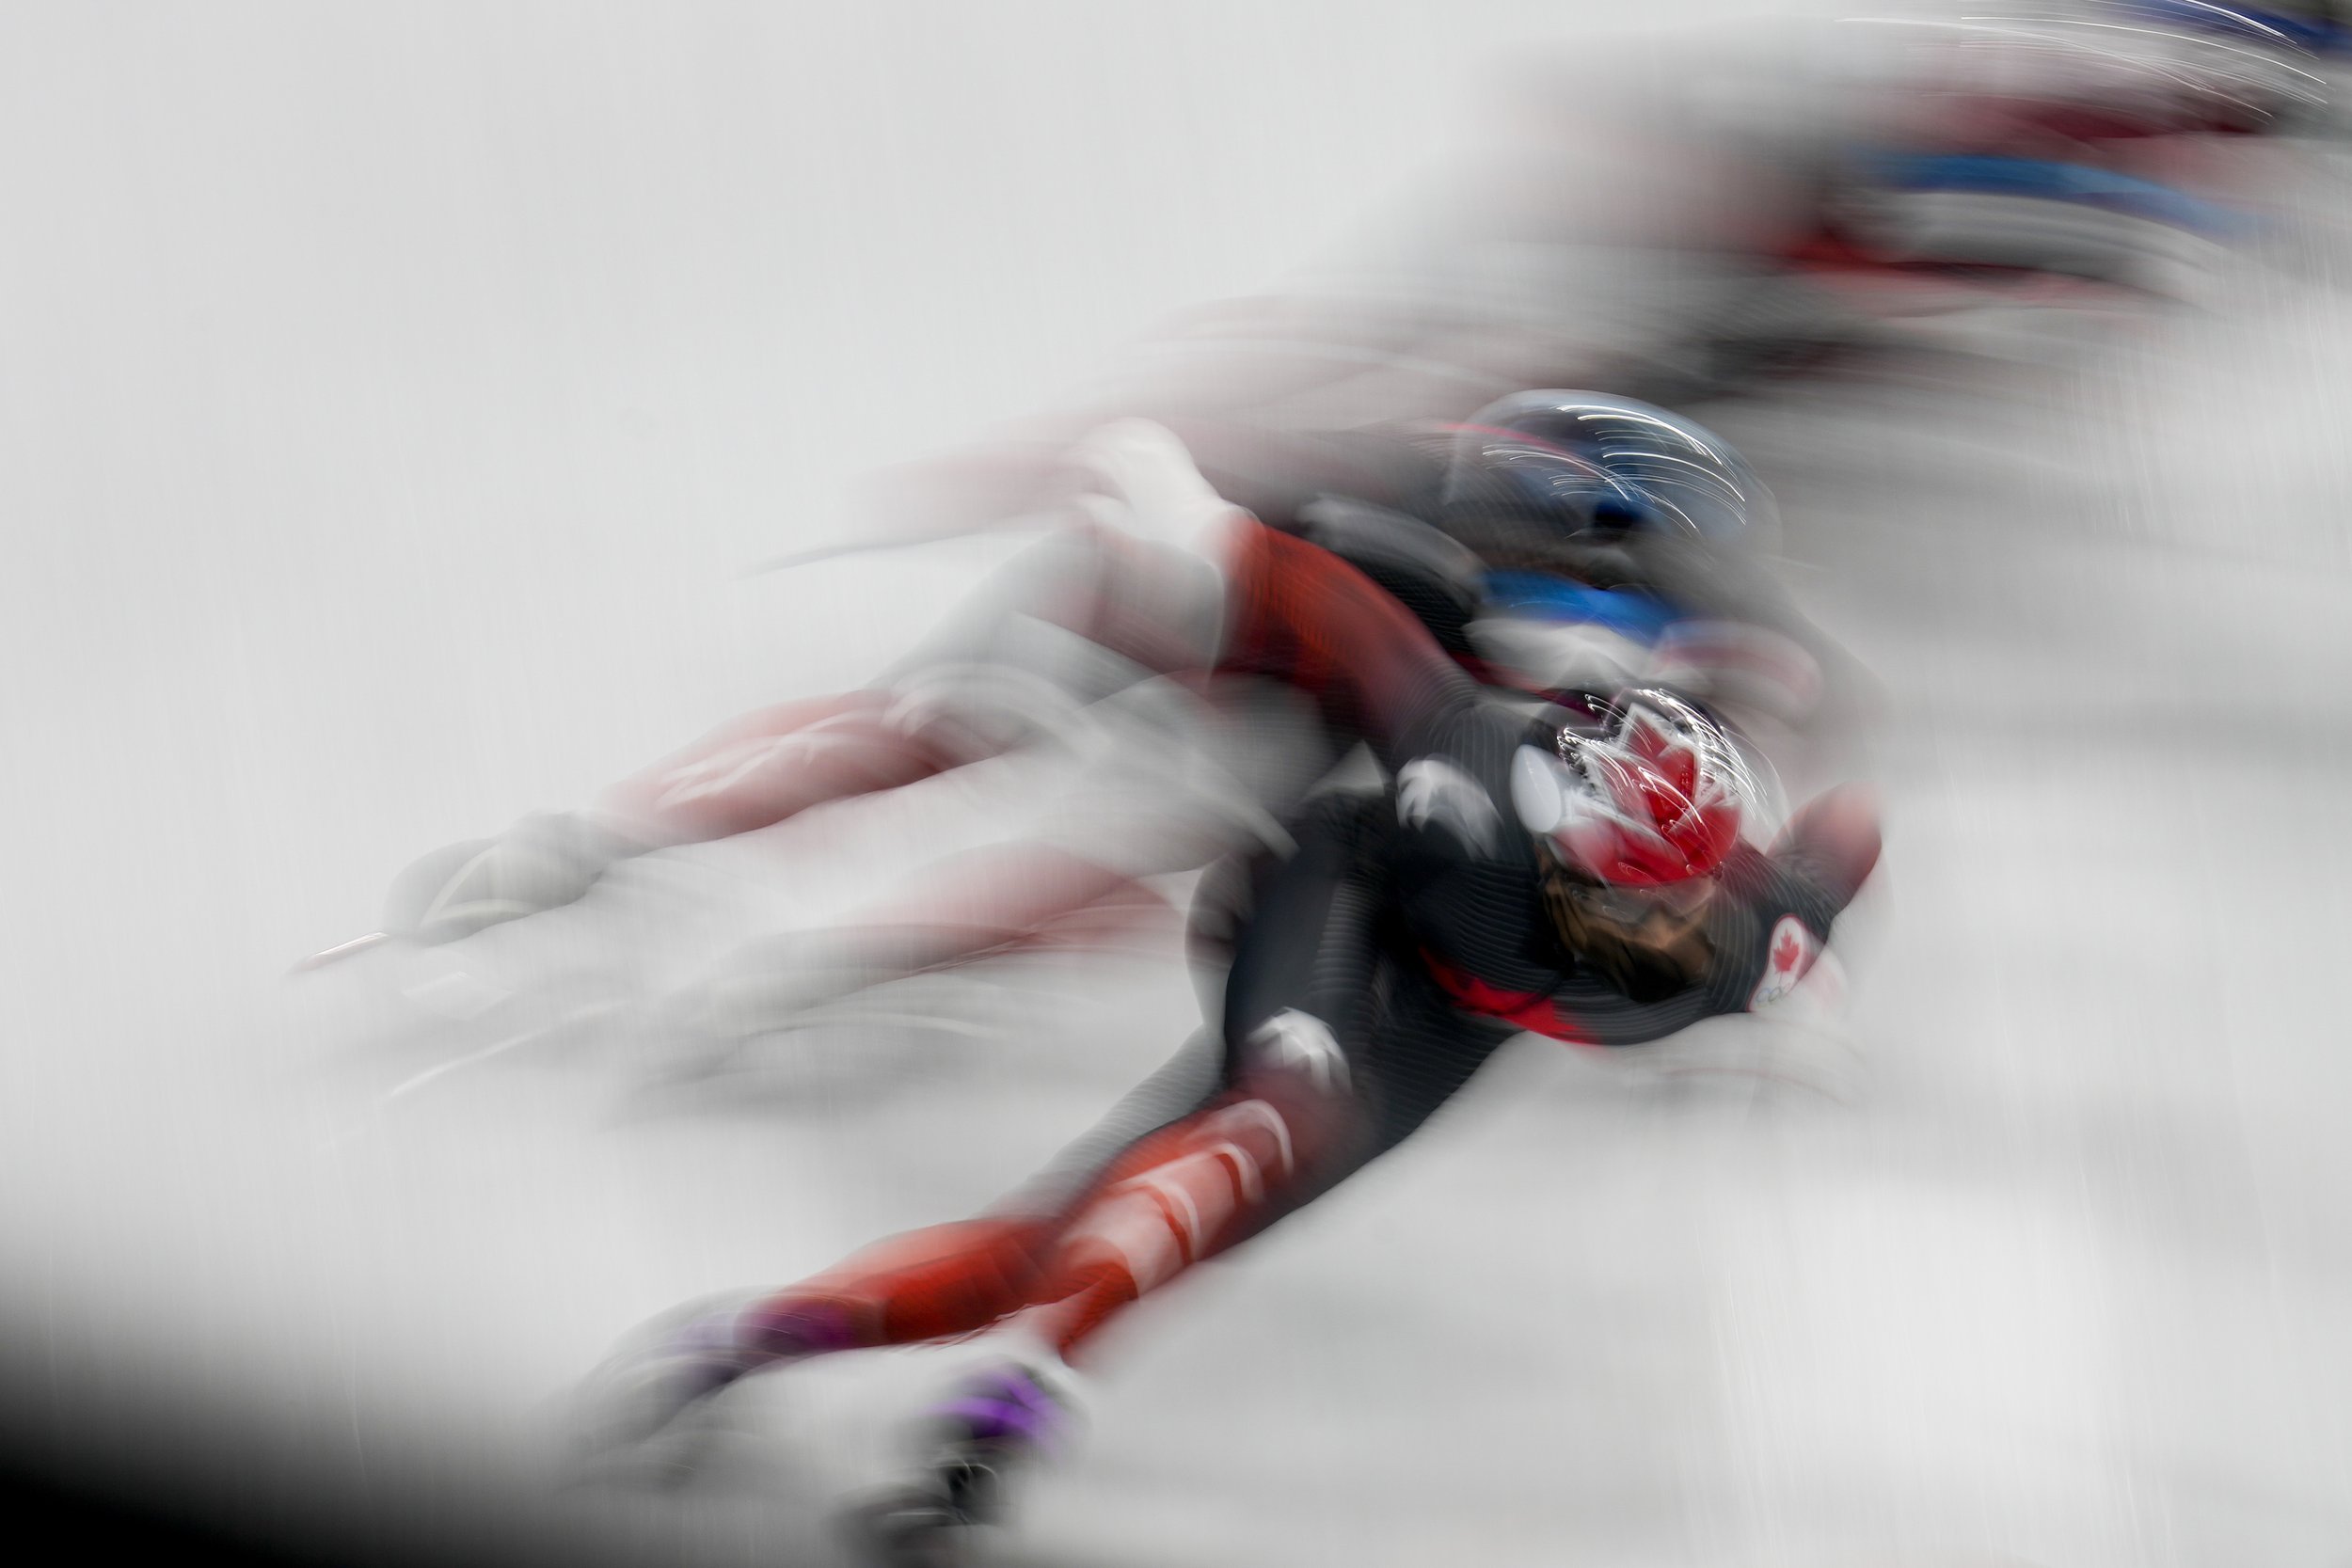  Members of the Canadian short track speedskating team train at the 2022 Winter Olympics, Thursday, Feb. 3, 2022, in Beijing. (AP Photo/Natacha Pisarenko) 